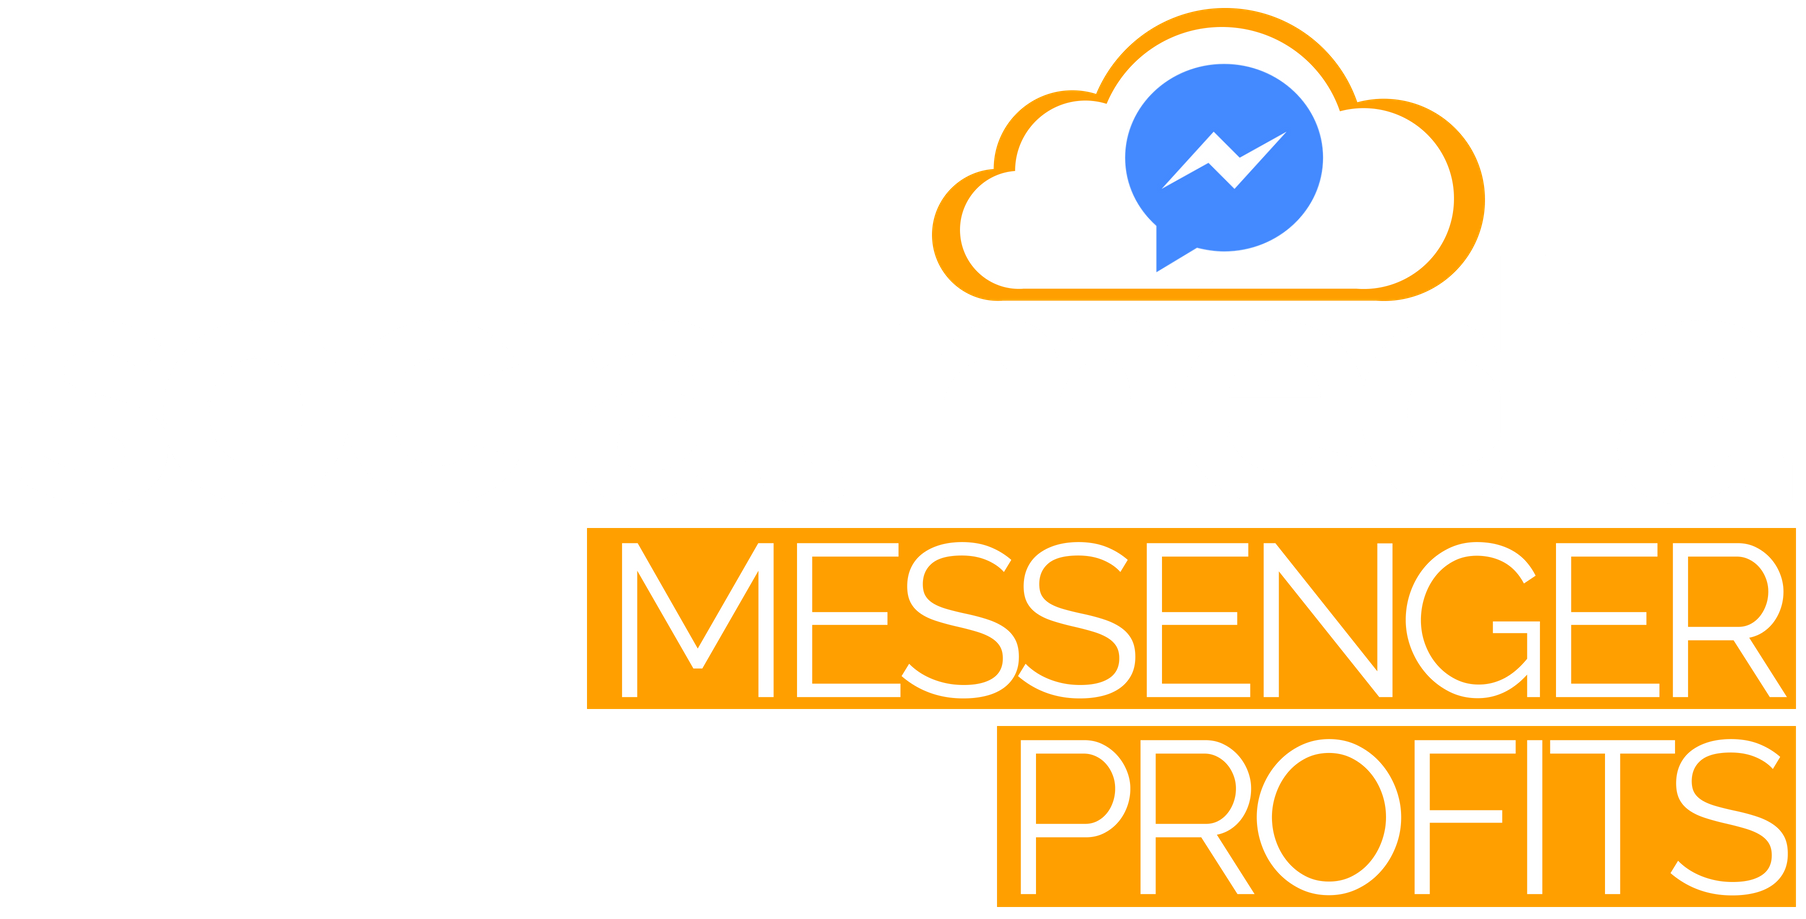 Messenger Profits Logo